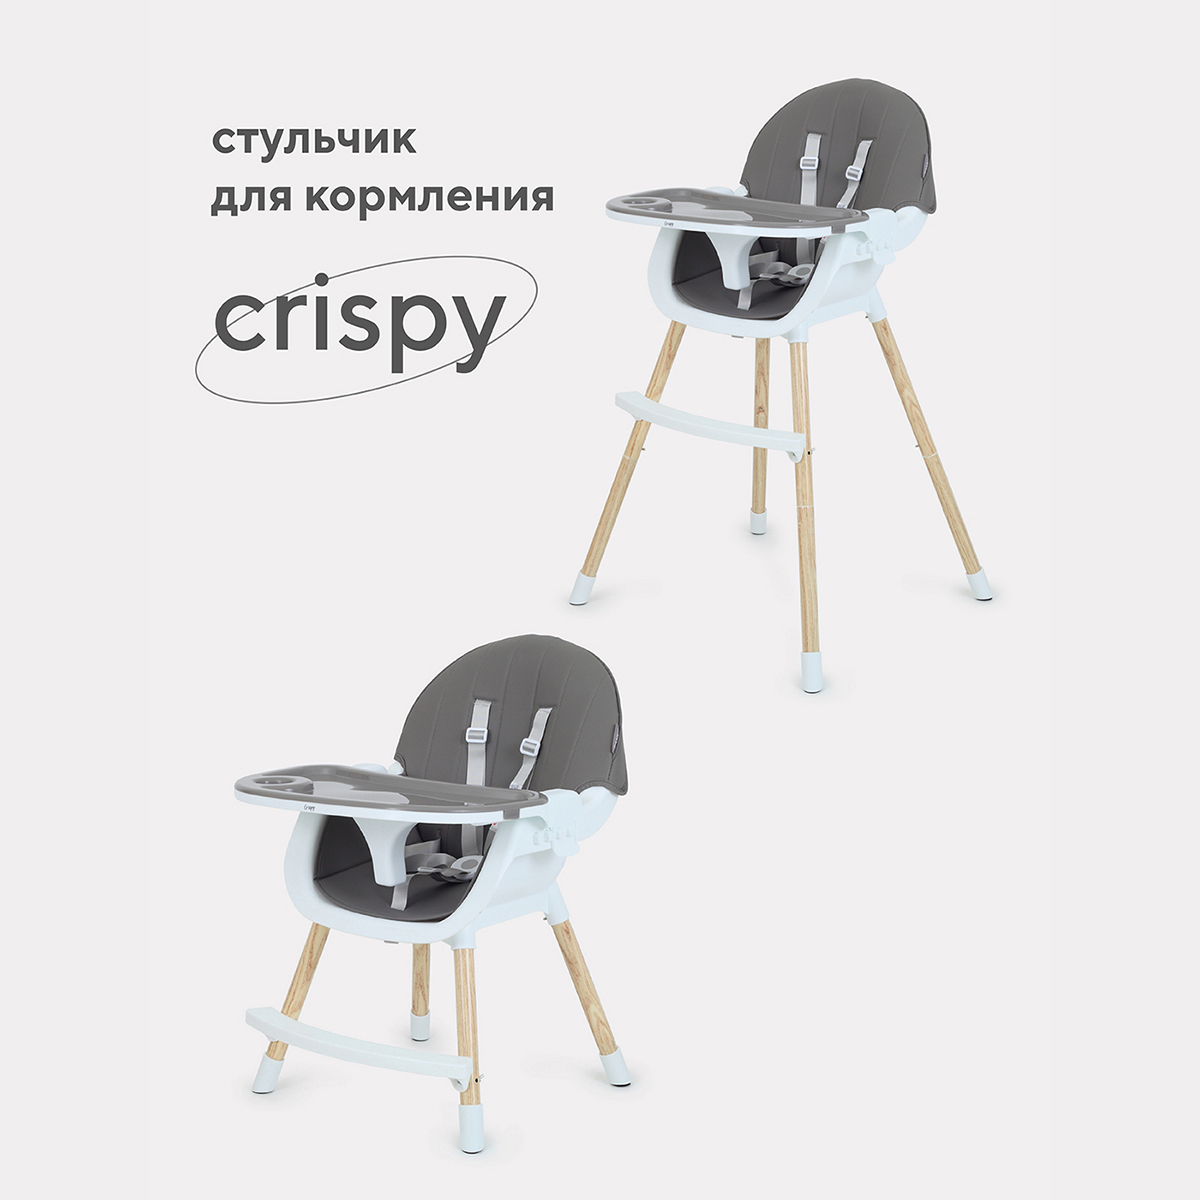 Стол-стул MOWBaby CRISPY RH150 Grey стульчик для кормления mowbaby crispy rh150